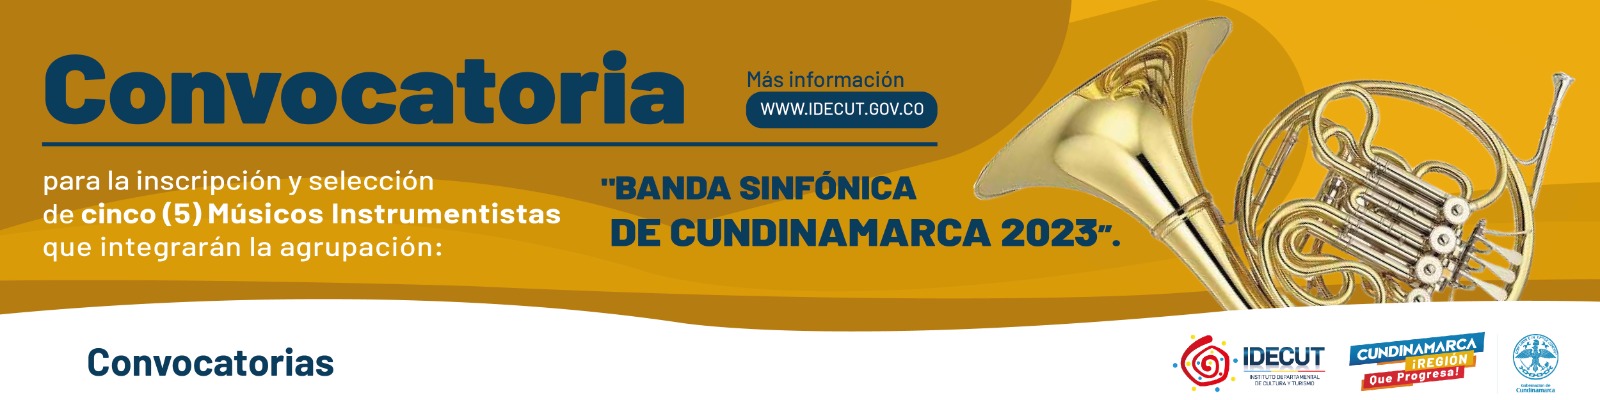 Convocatoria de la Banda Sinfónica de Cundinamarca